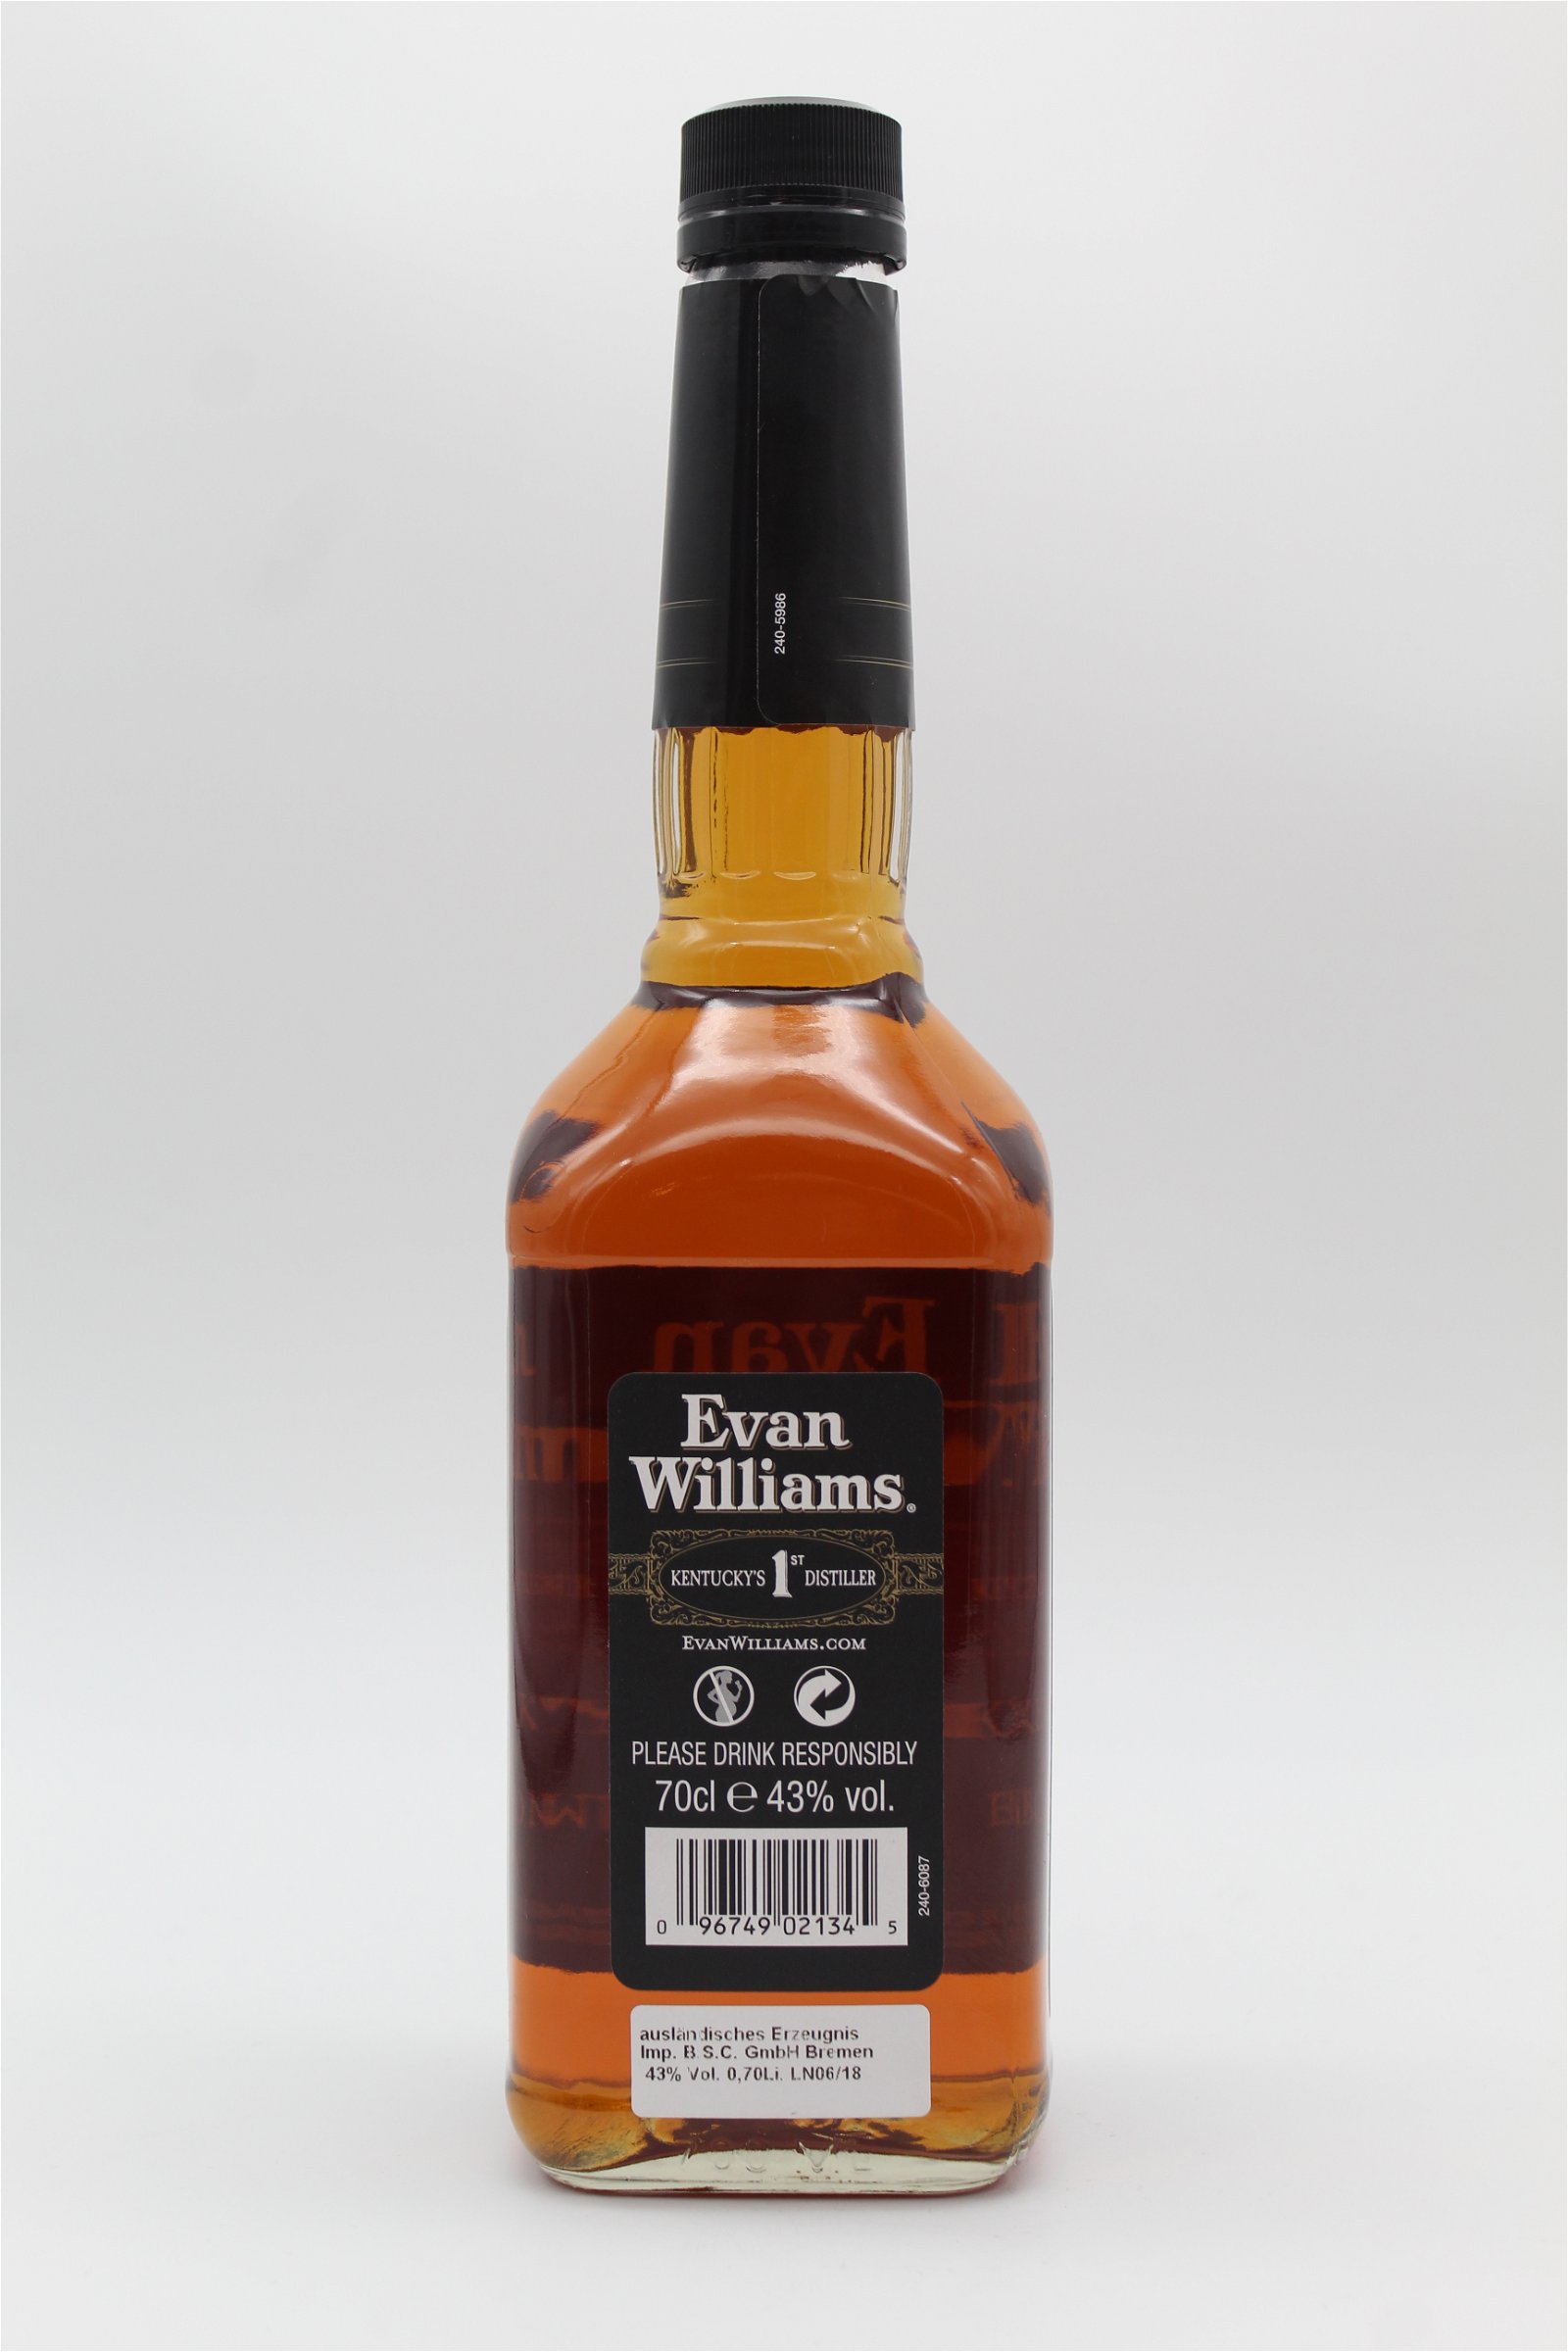 Evan Williams Black Kentucky Straight Bourbon Whiskey